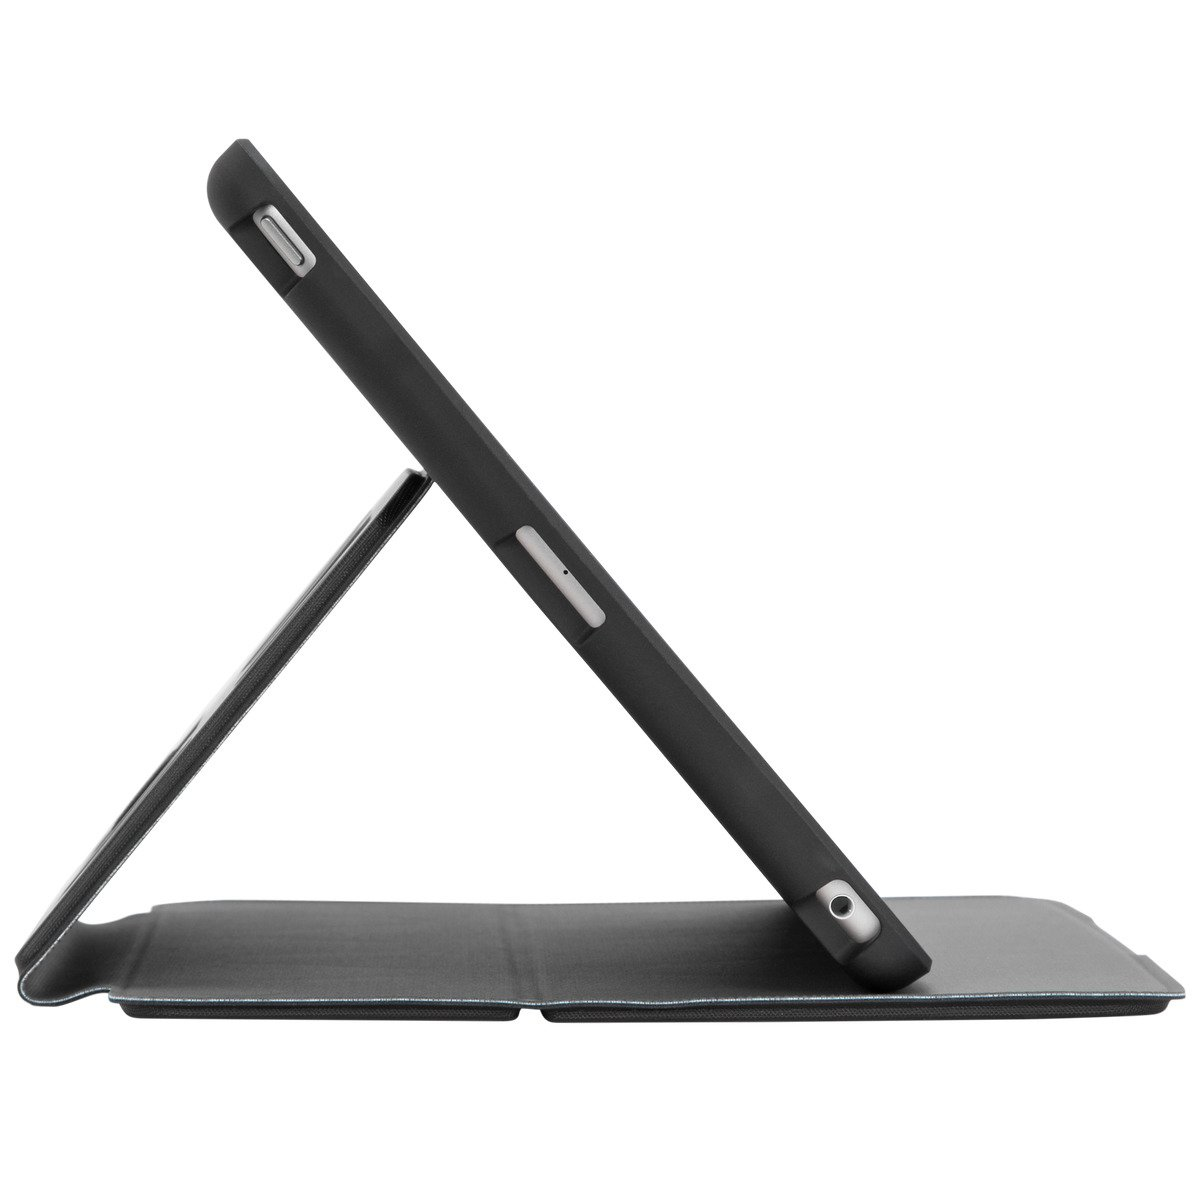 Targus Pro-Tek case for iPad (7th Gen) 10.2-inch  iPad Air 10.5-inch and iPad Pro 10.5-inch Black